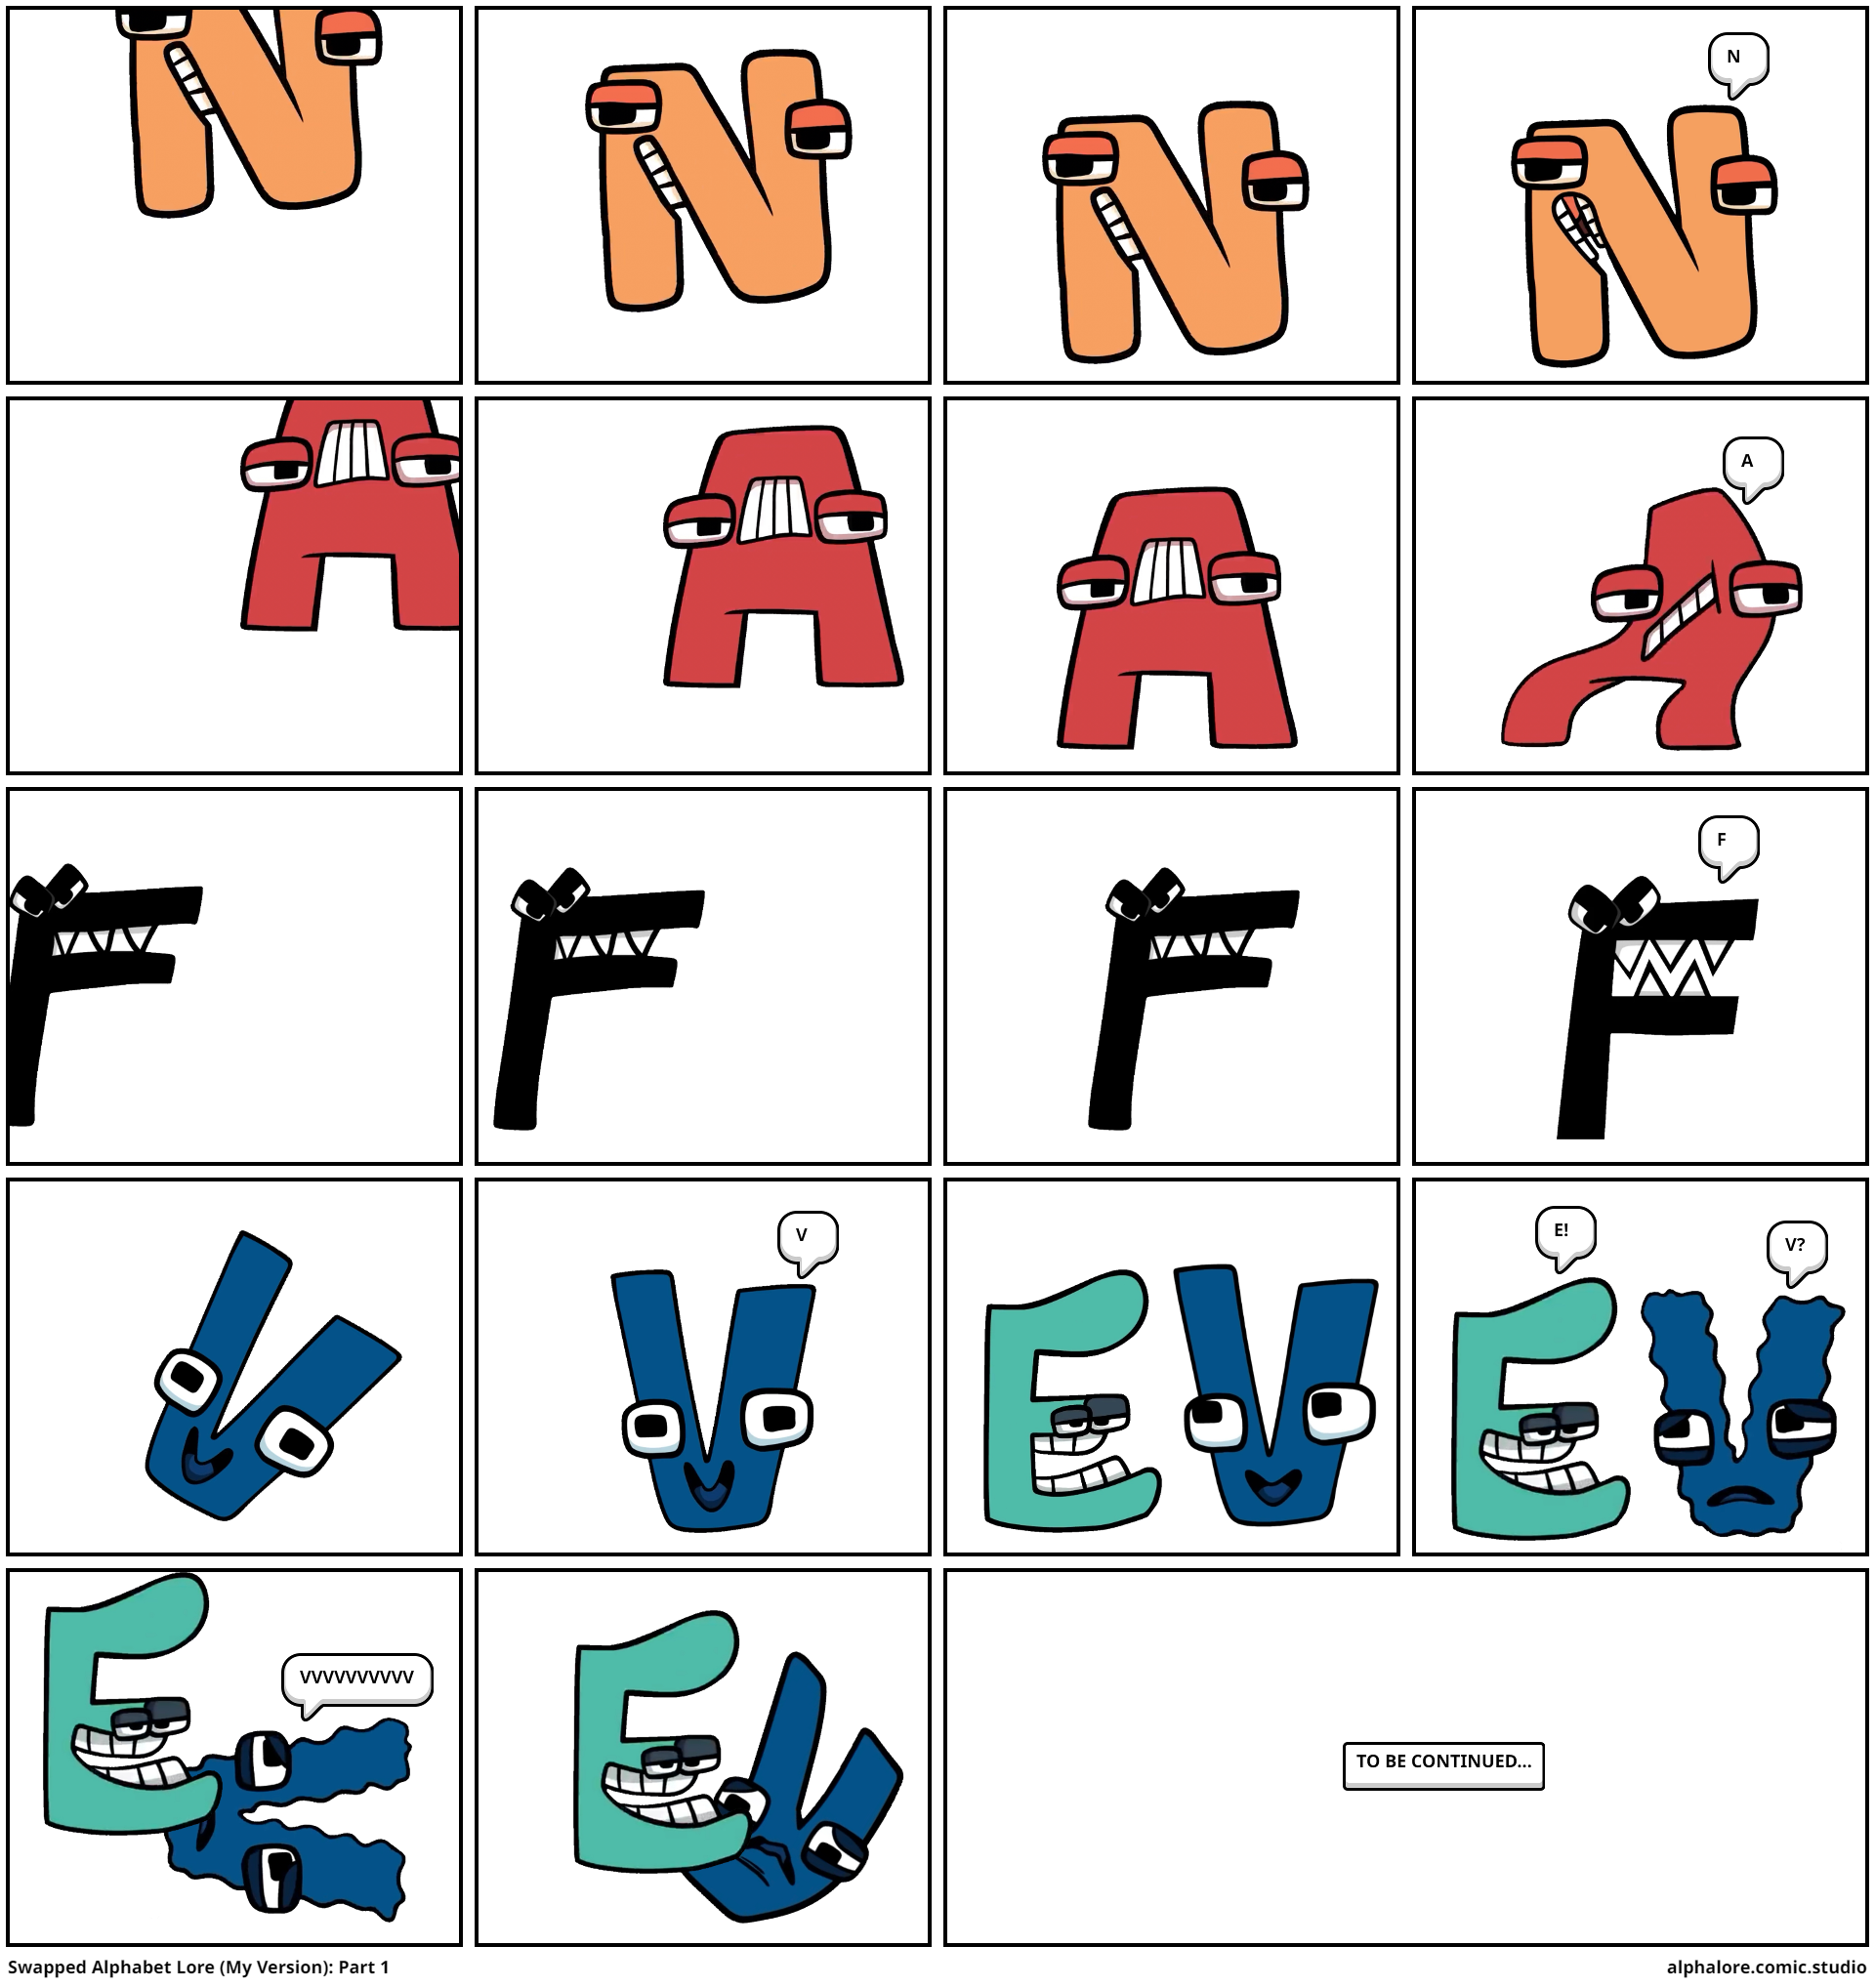 Swapped Alphabet Lore (My Version): Words Part 2 - Comic Studio